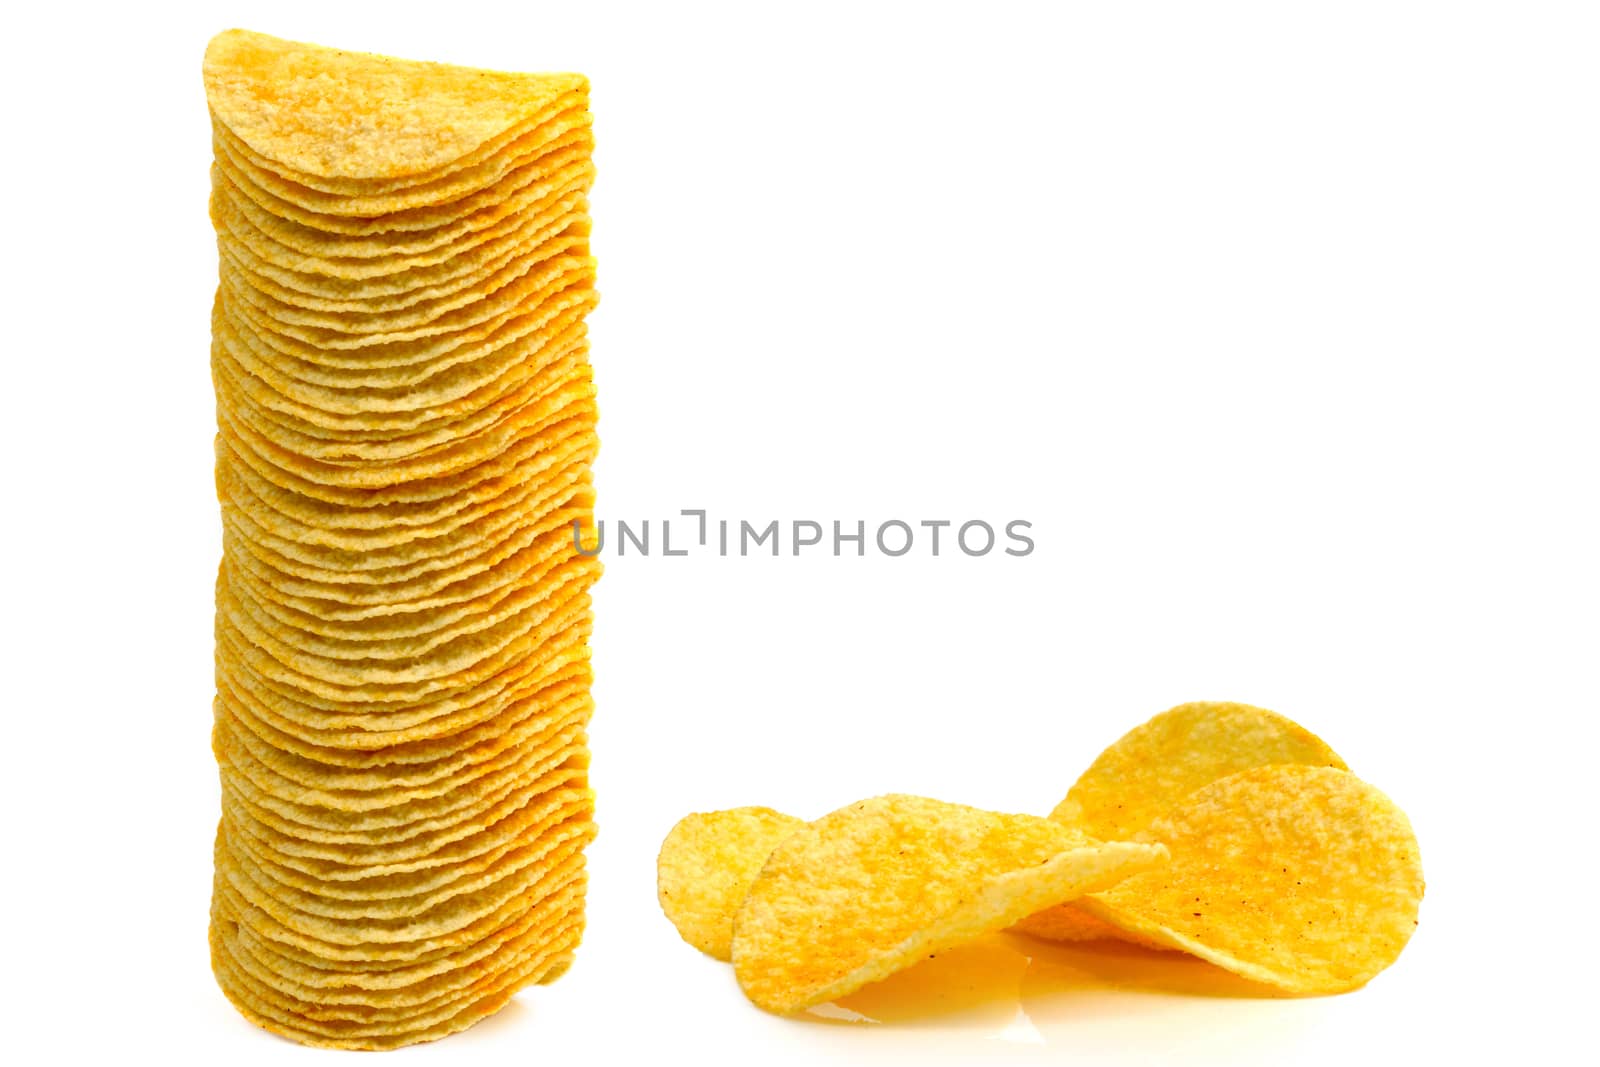 Potato Chips on a white background by sompongtom